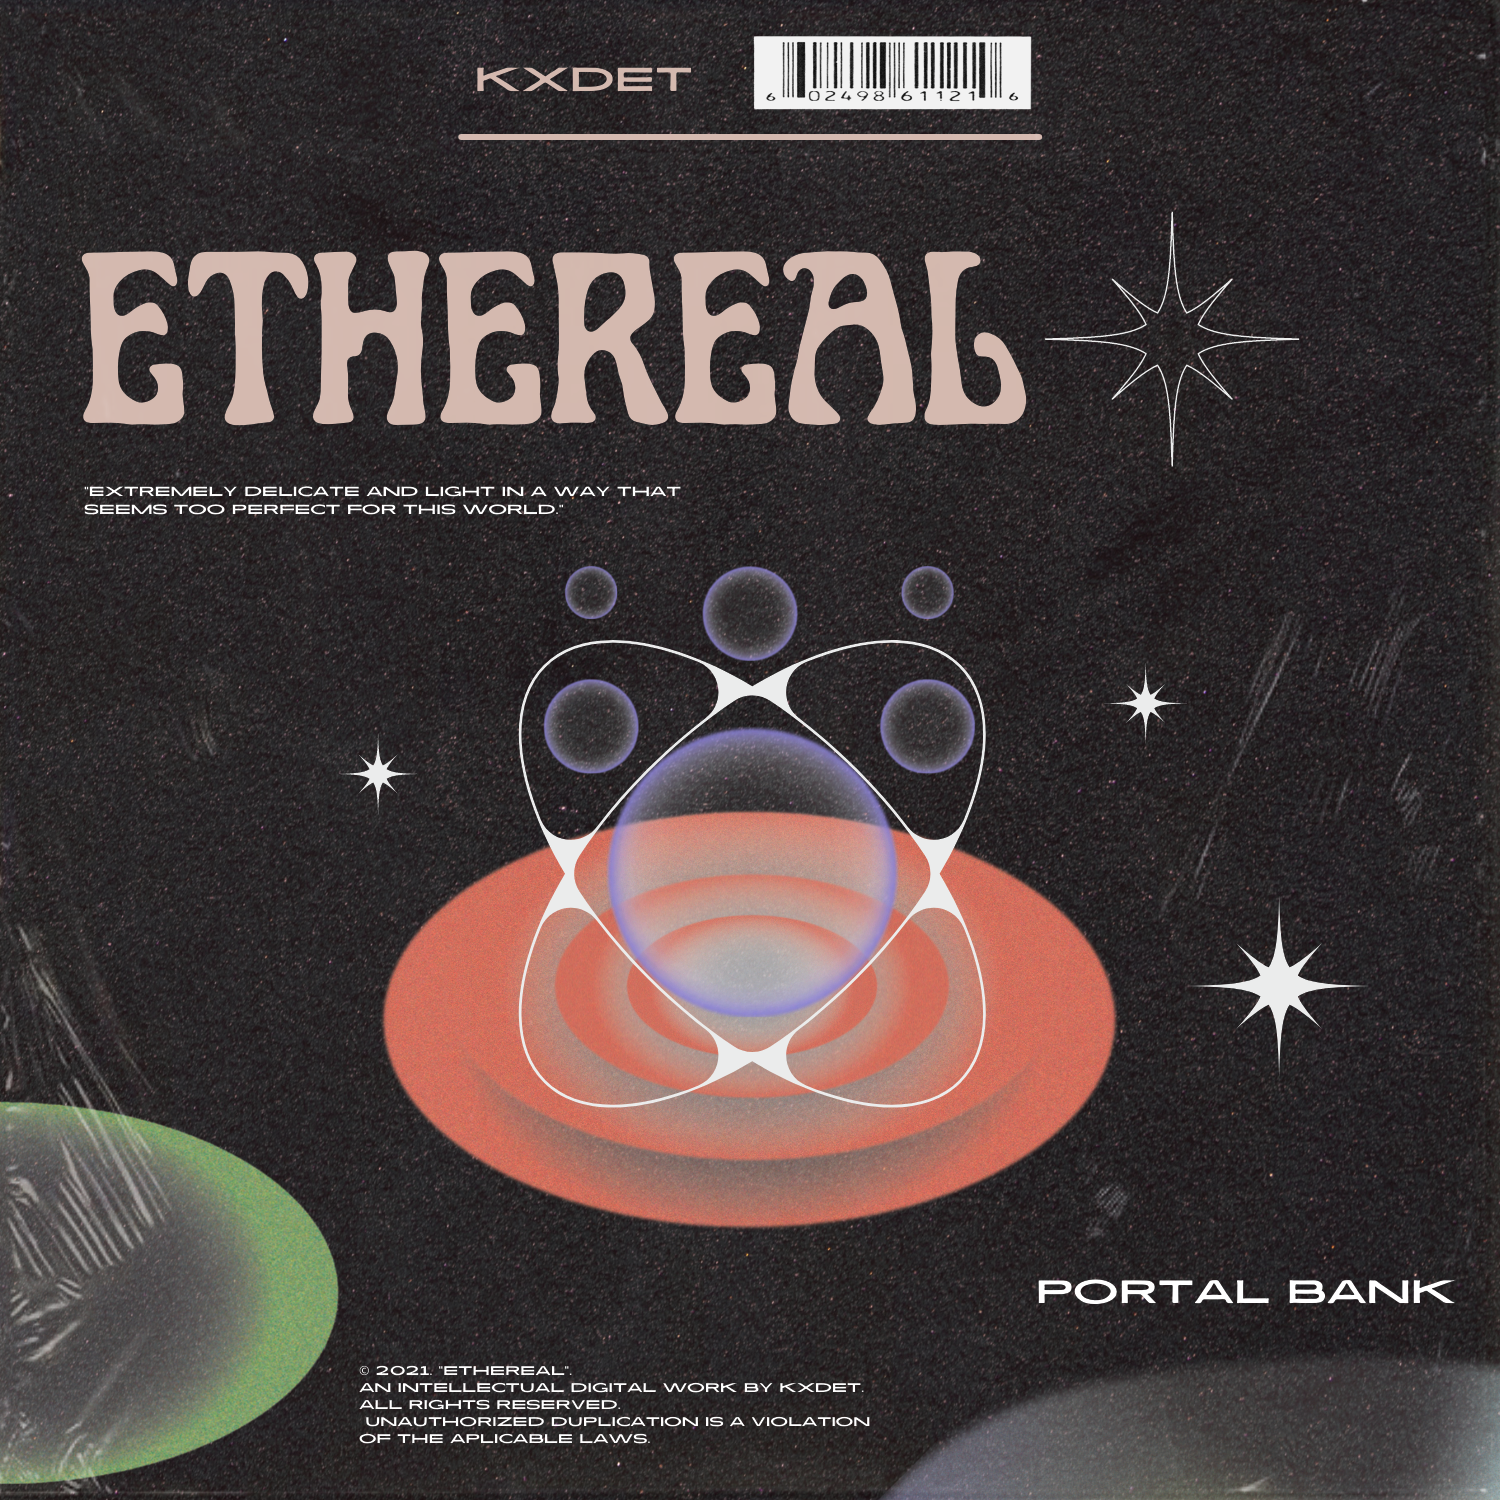 ETHEREAL (PORTAL BANK)